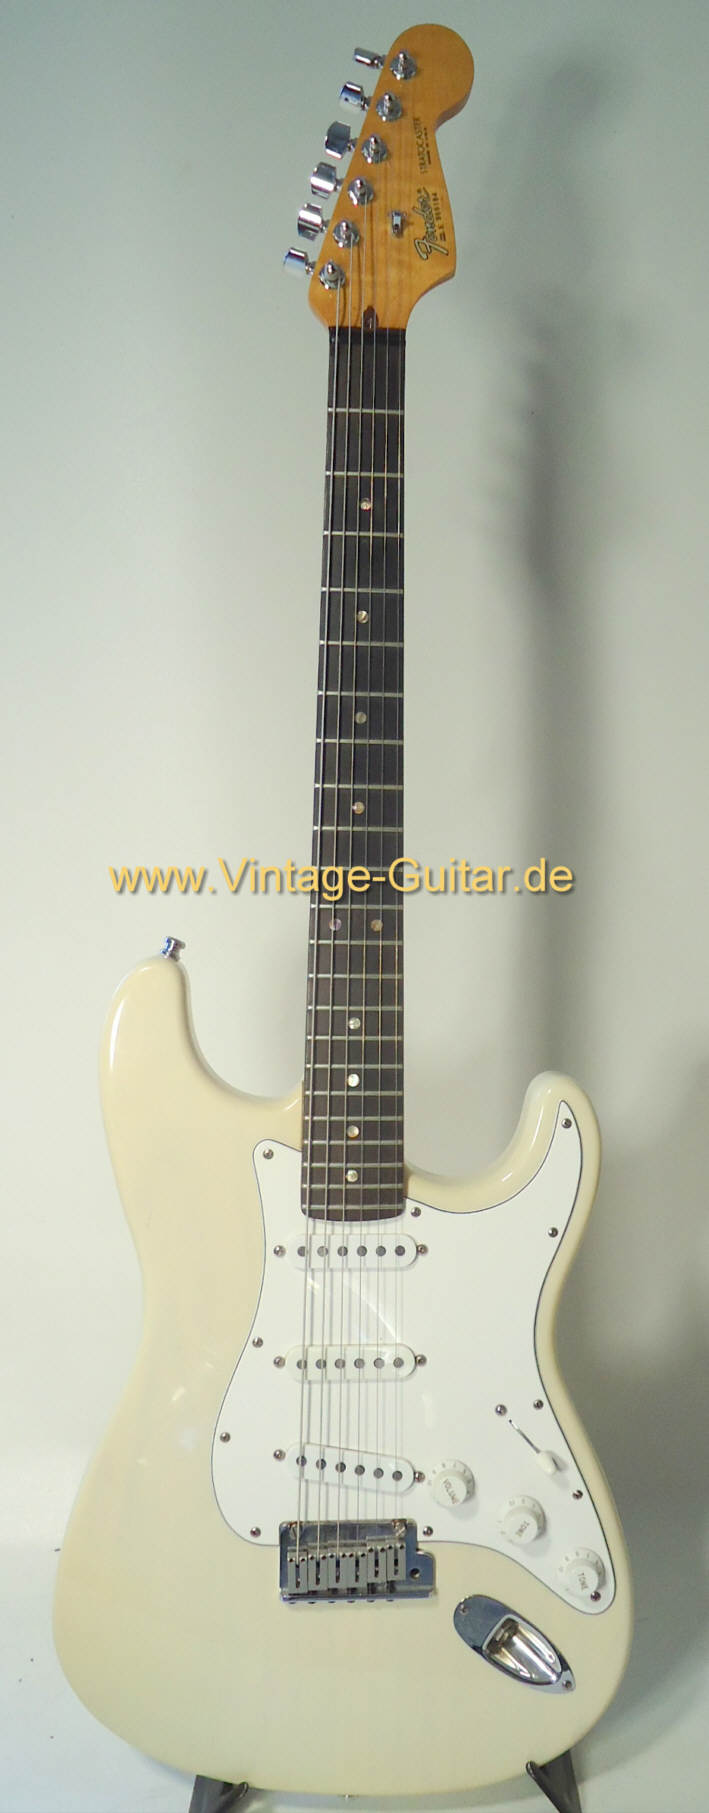 Fender-Stratocaster-1989-CC-blonde-a.jpg